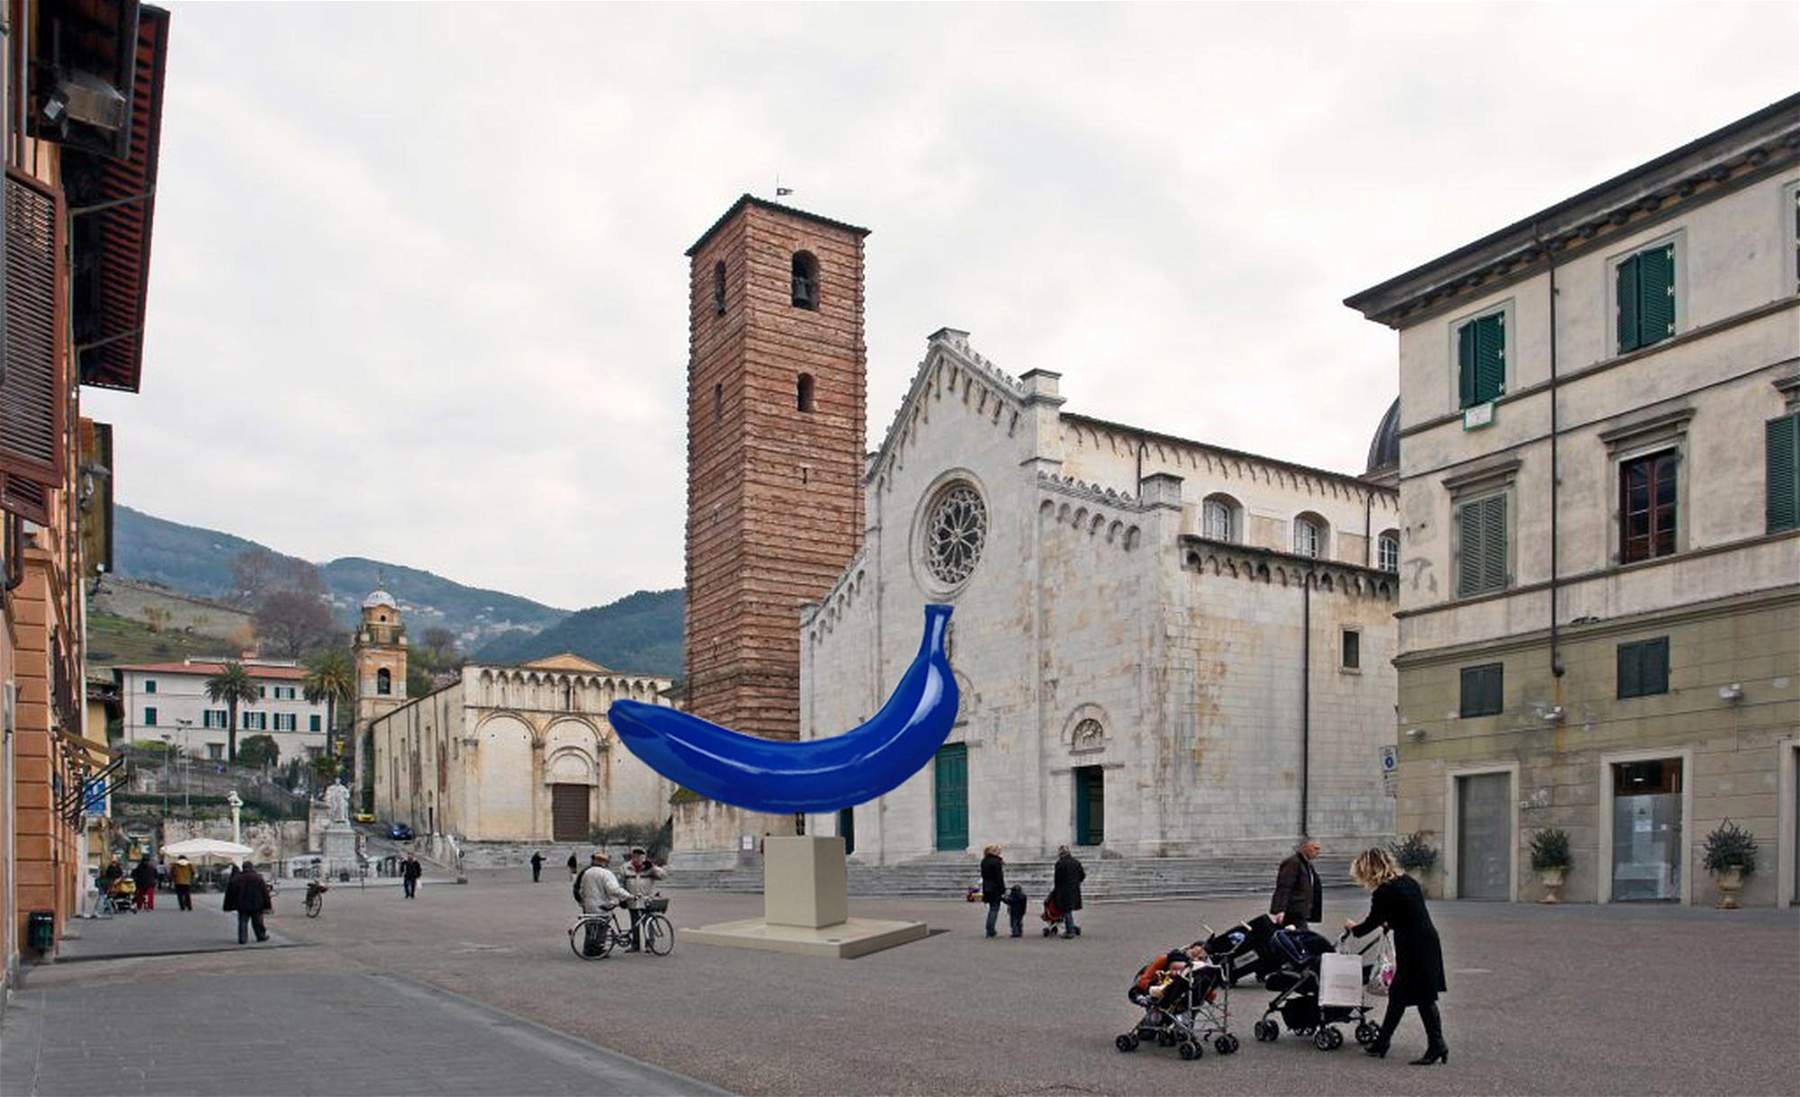 Giuseppe Veneziano's giant blue banana invades one of Tuscany's most beautiful squares